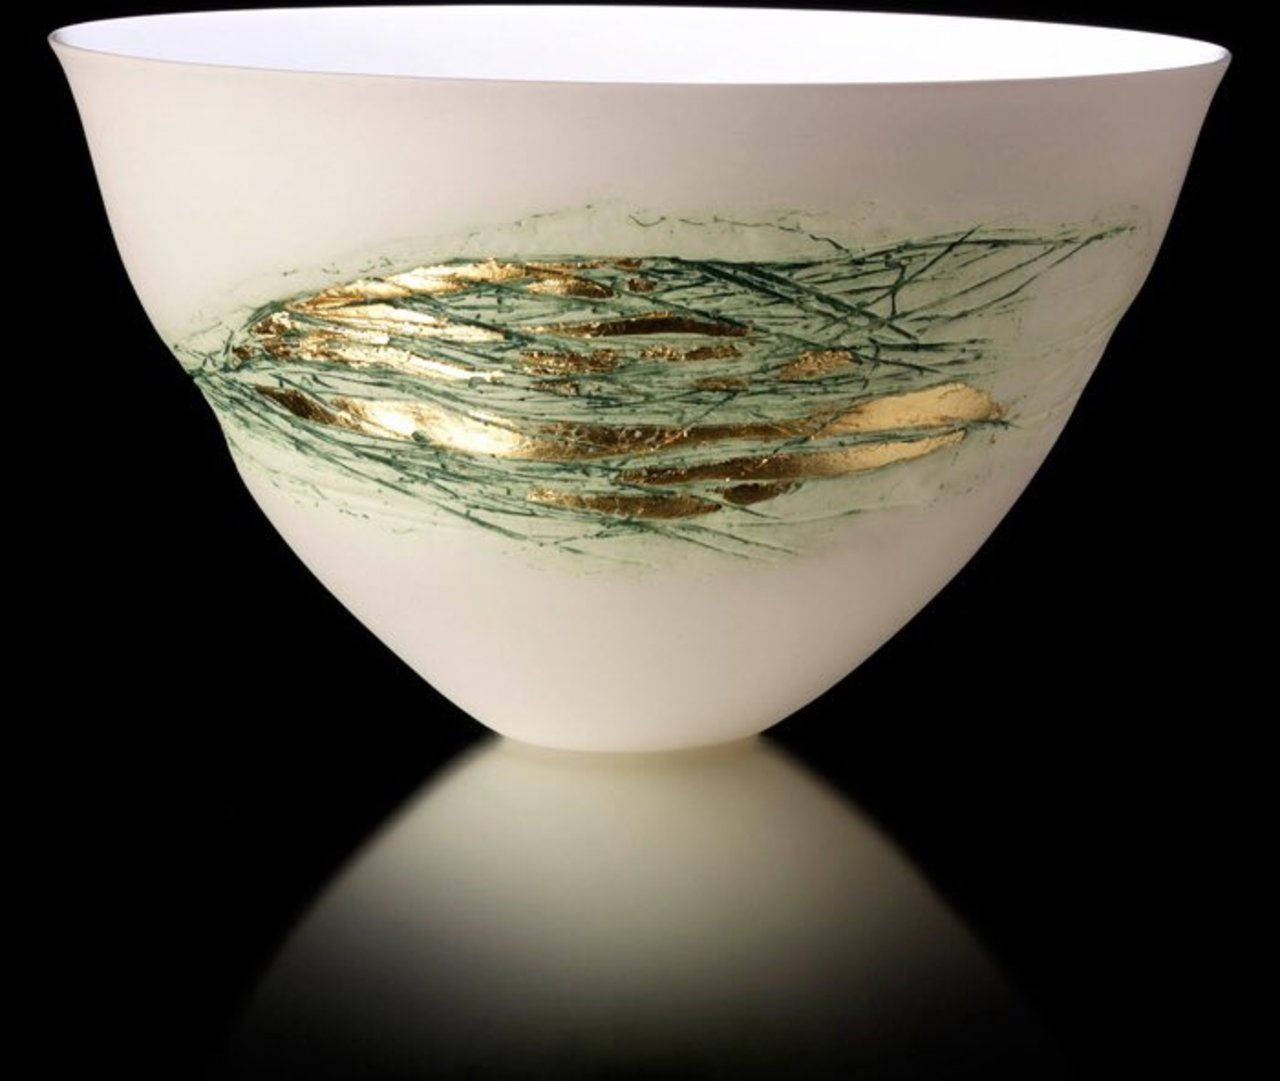 Using bone china, beautiful vessels by http://www.angelamellor.com/news.html #art #ceramics #sculpture #photography https://t.co/pKfv4LonV9